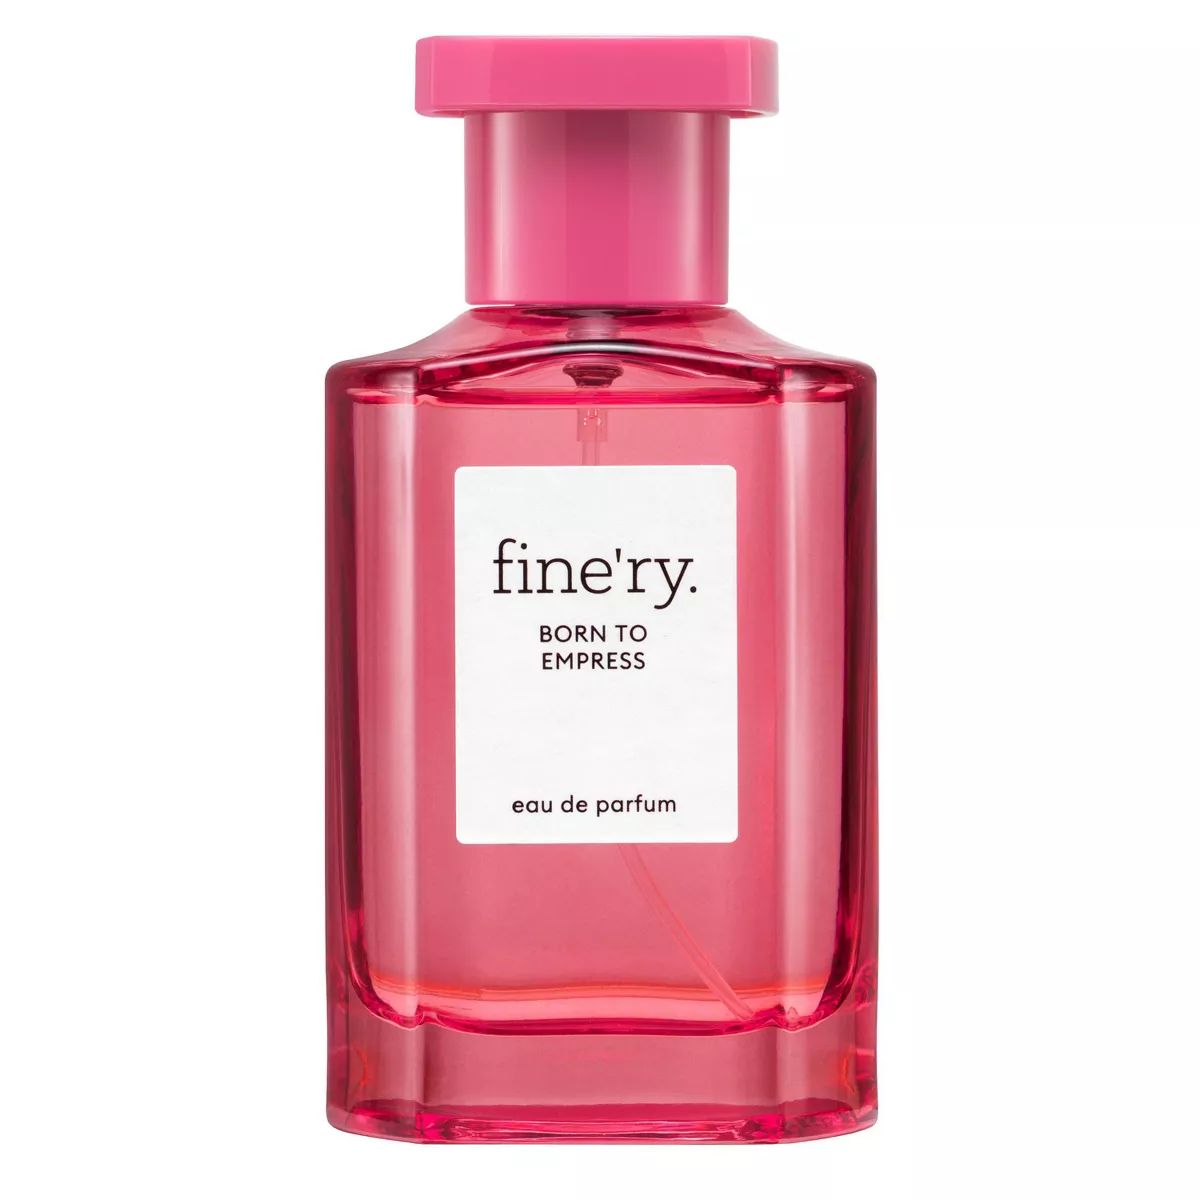 fine'ry. Women's Eau de Parfum Perfume - Born to Empress - 2 fl oz | Target